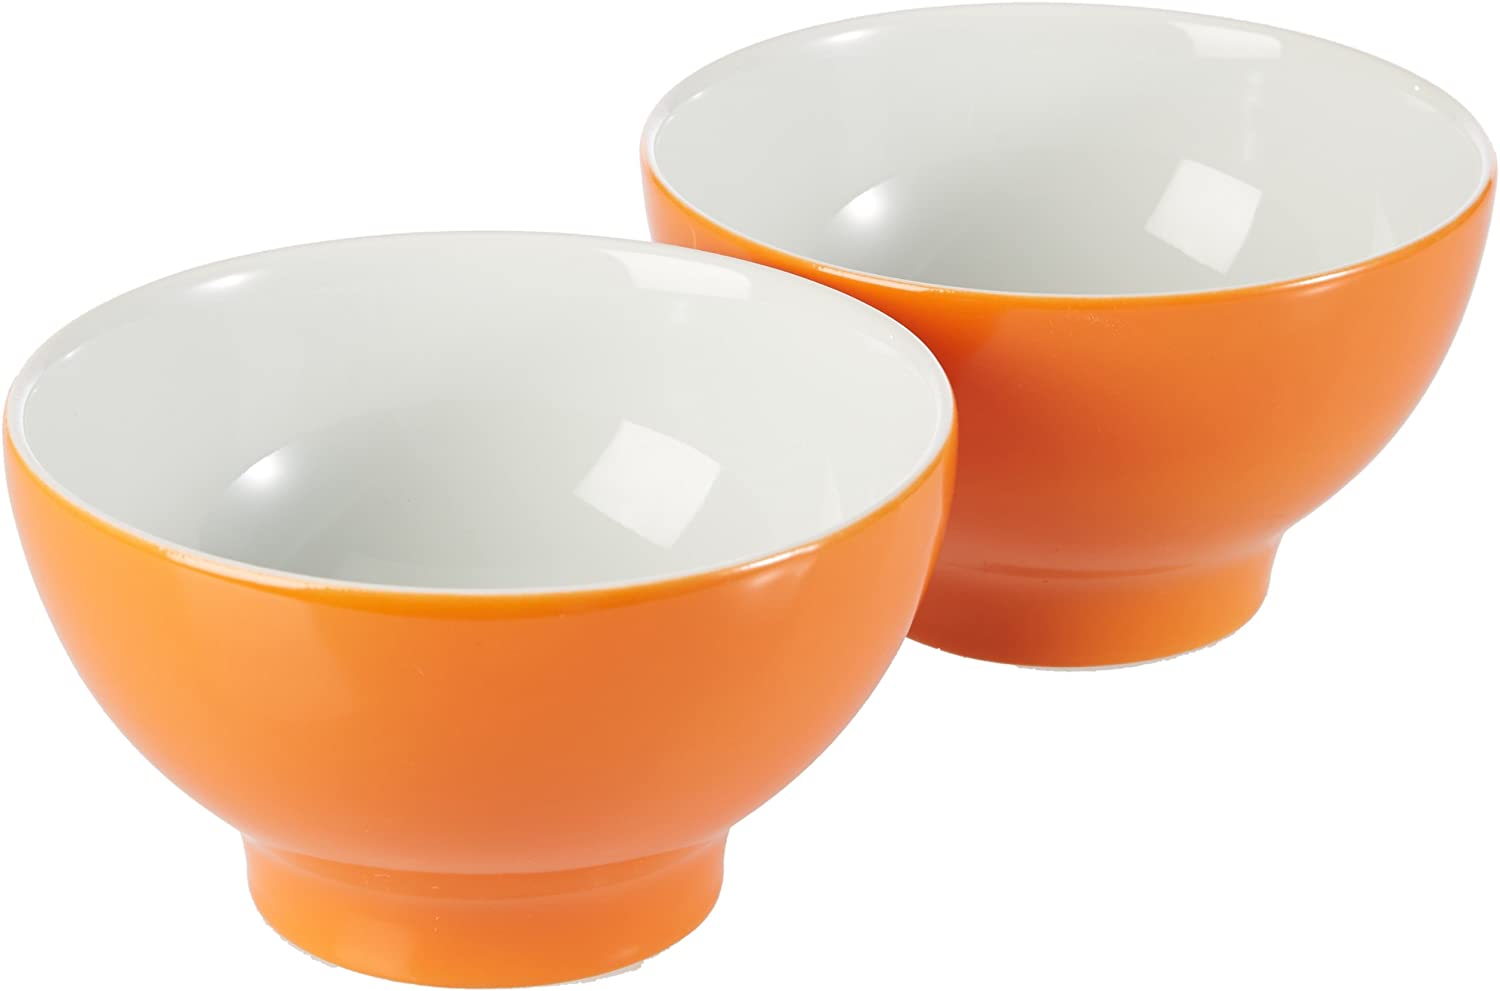 Kahla Pronto 57C148A72556C Bowls Set of 2 Orange